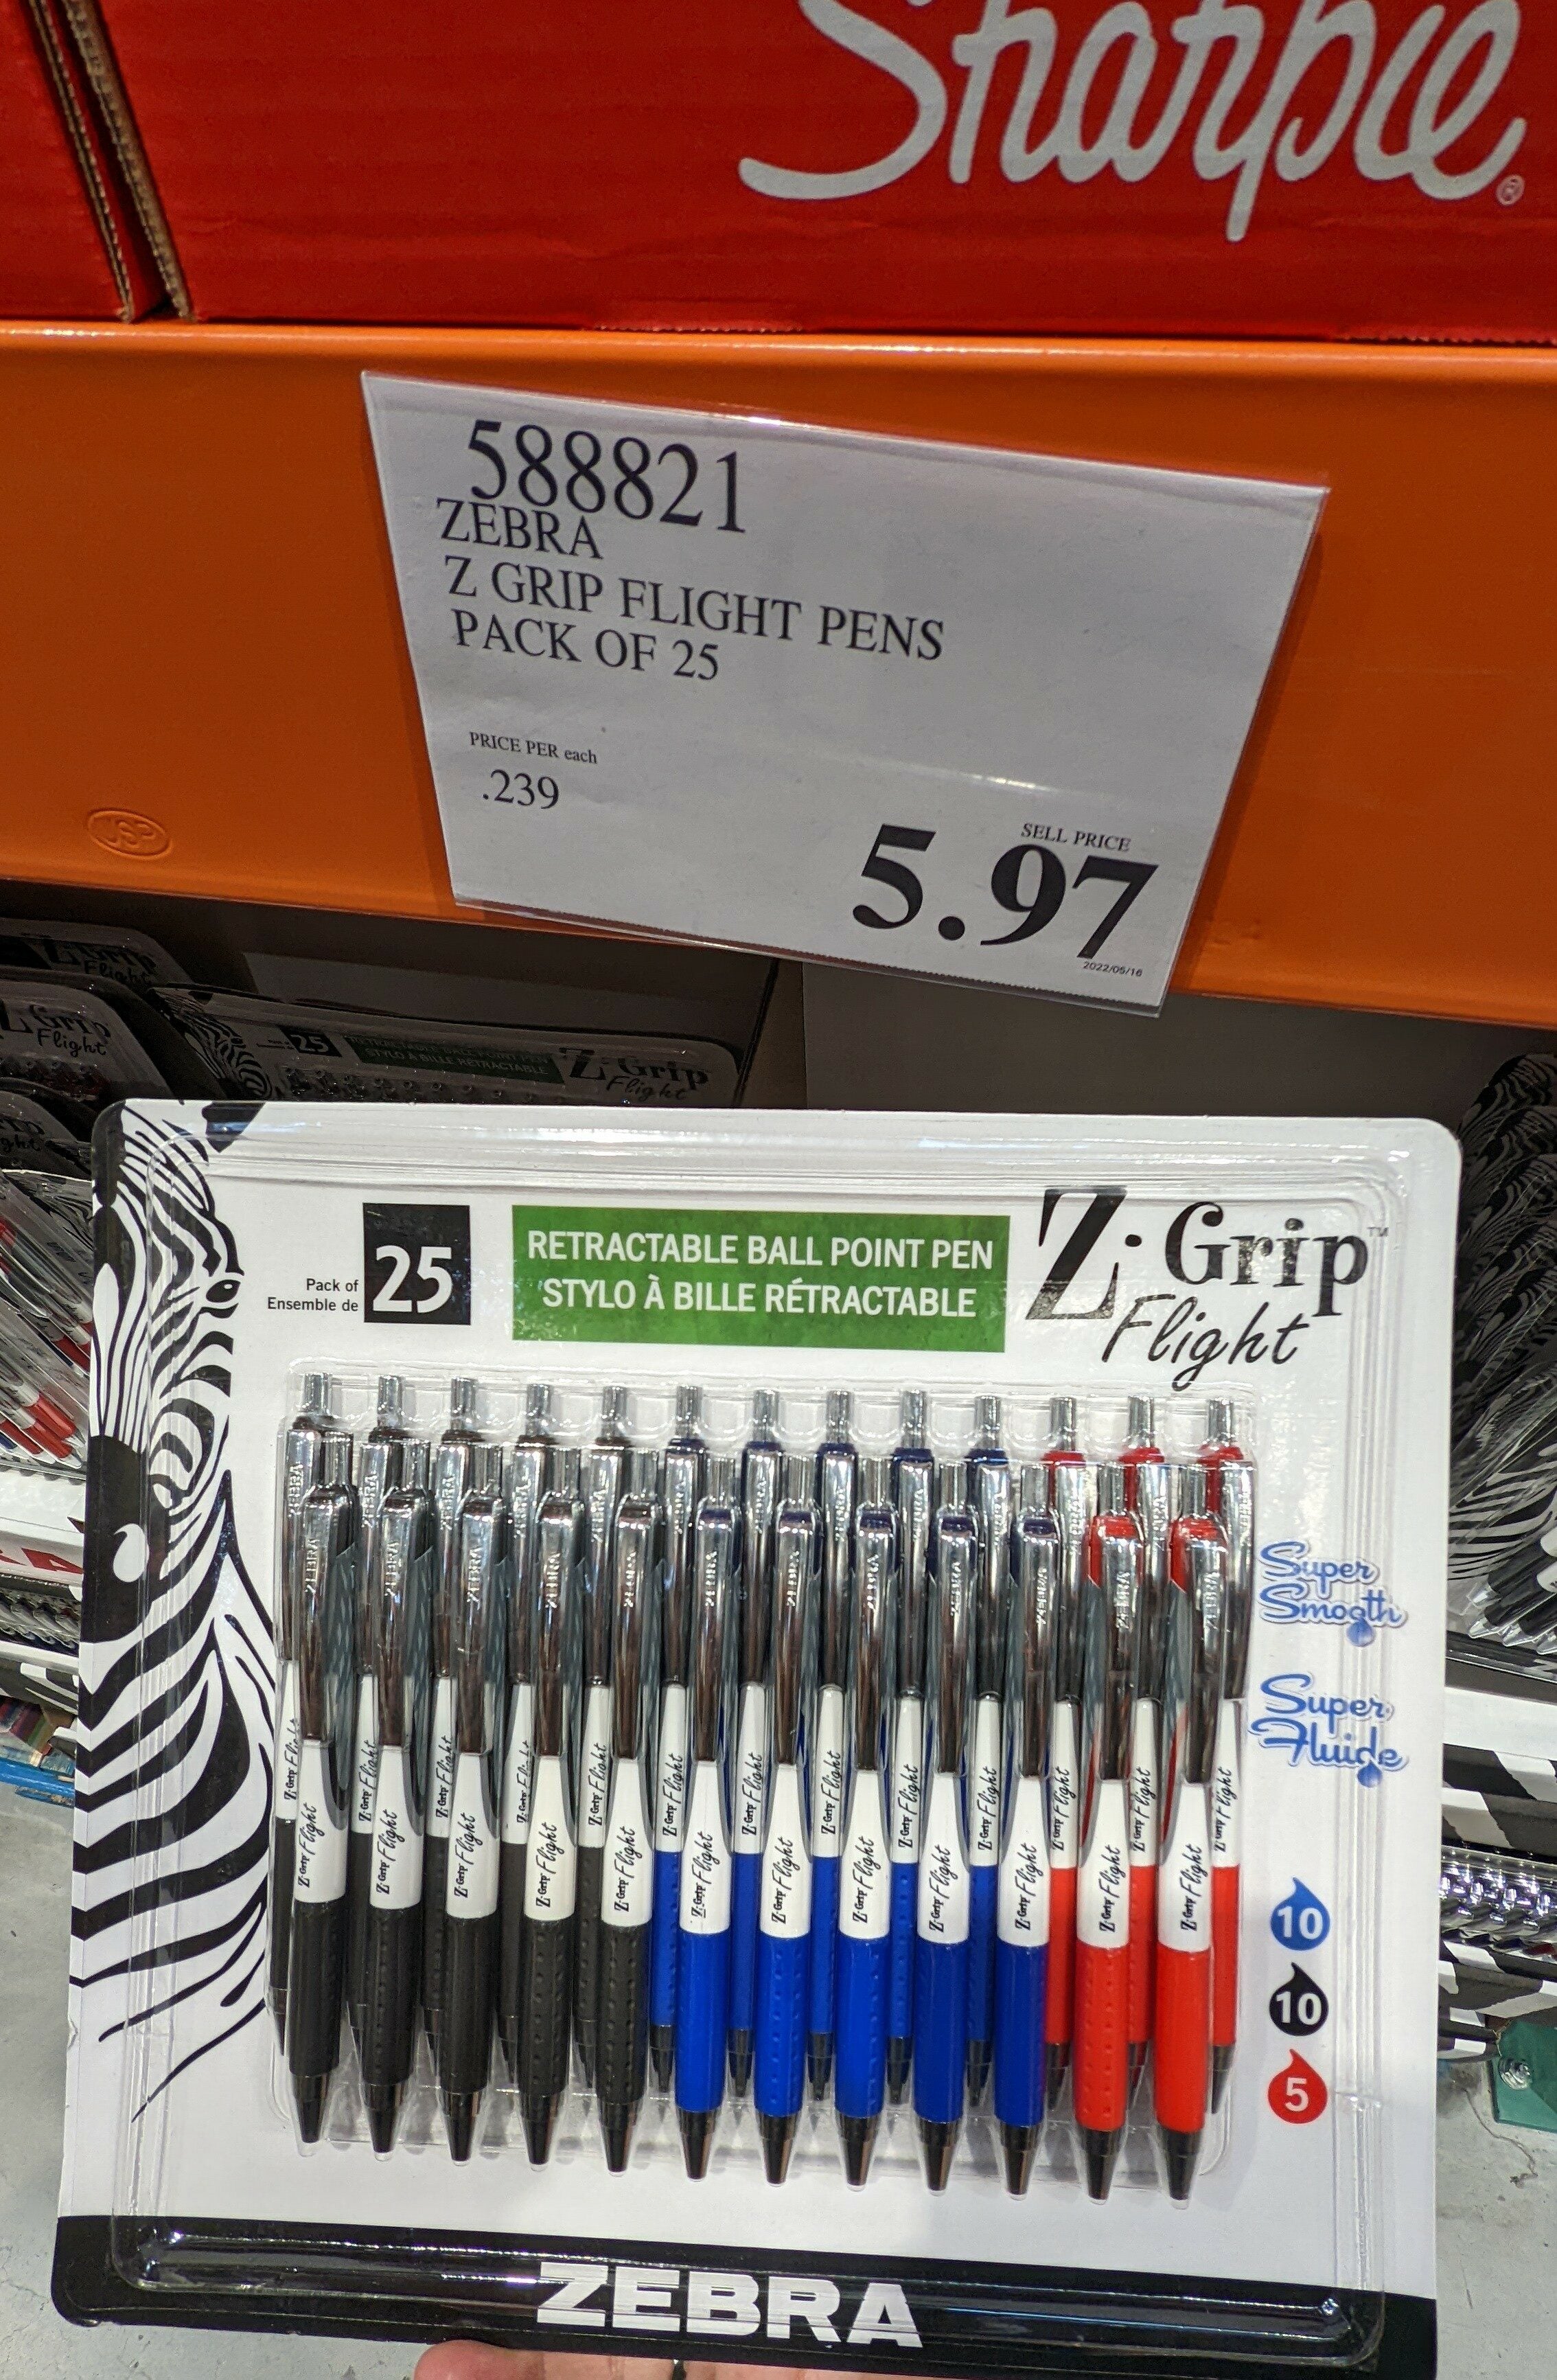 Pack of 1 to Pack of 40 ZEBRA Z-GRIP FLIGHT Ballpoint Pen 1.2mm Ultra-smooth 